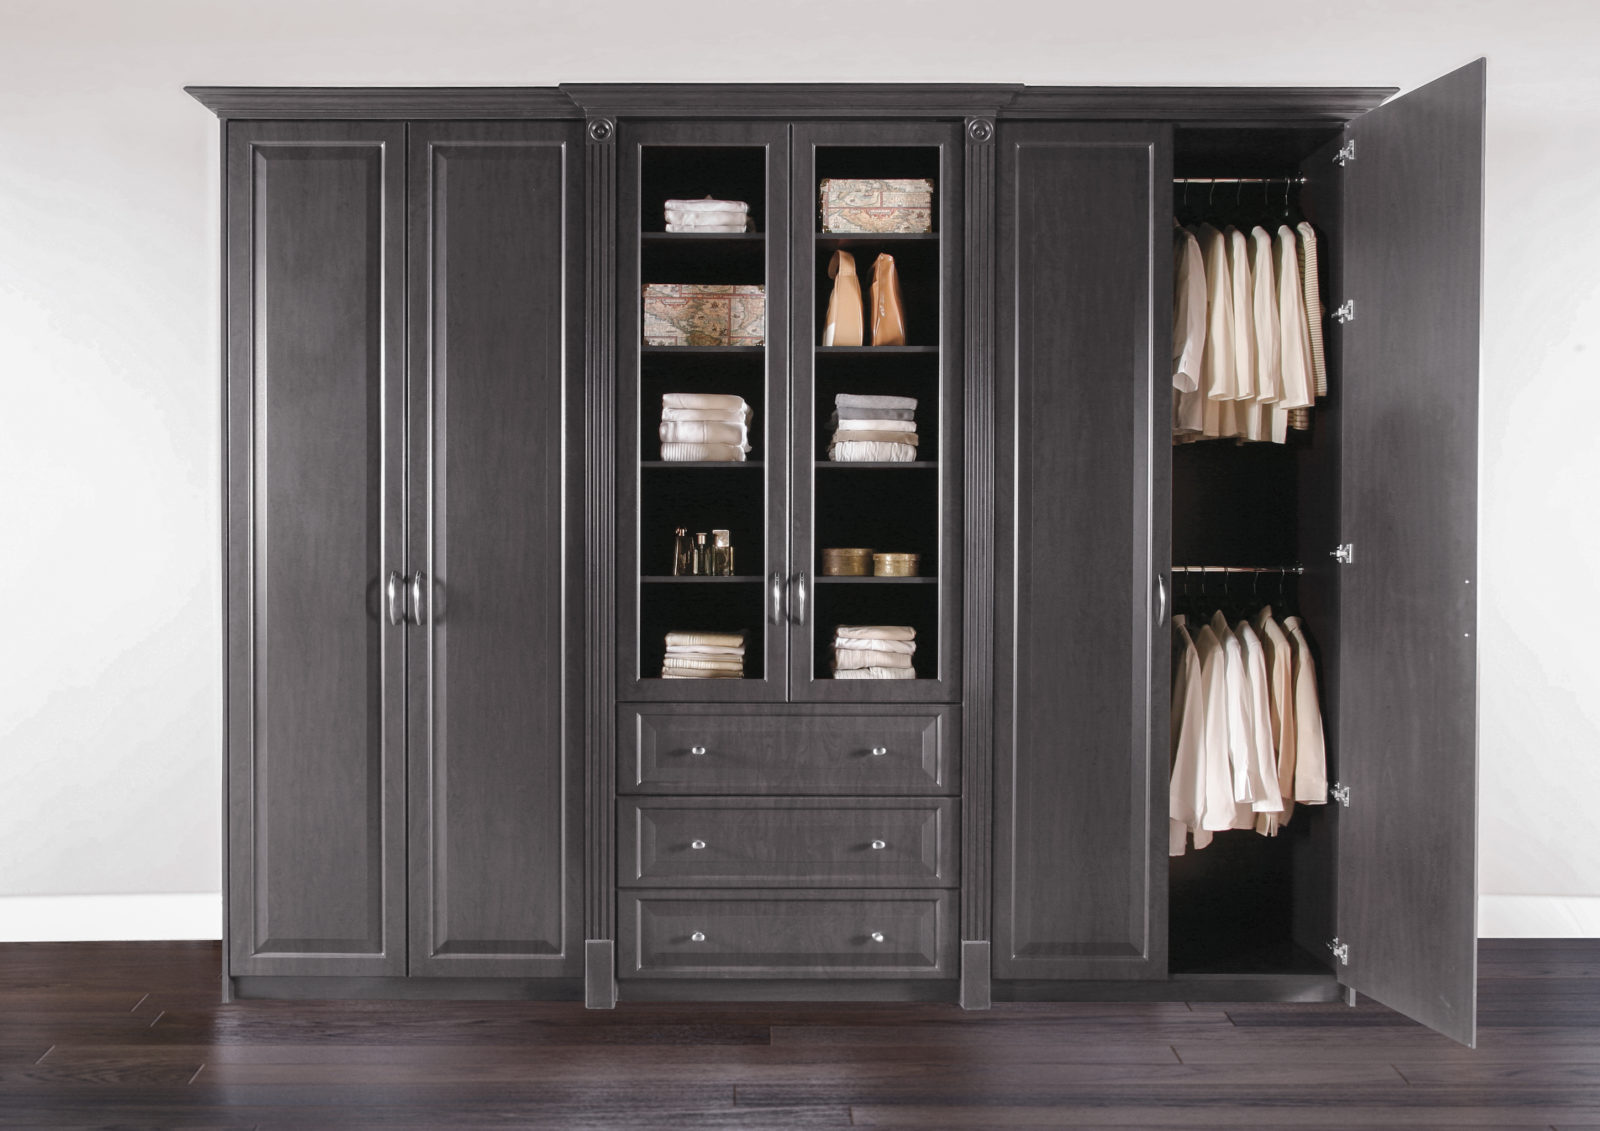 3 Creative Bedroom Storage Furniture Ideas to Lighten Your Closet's Load